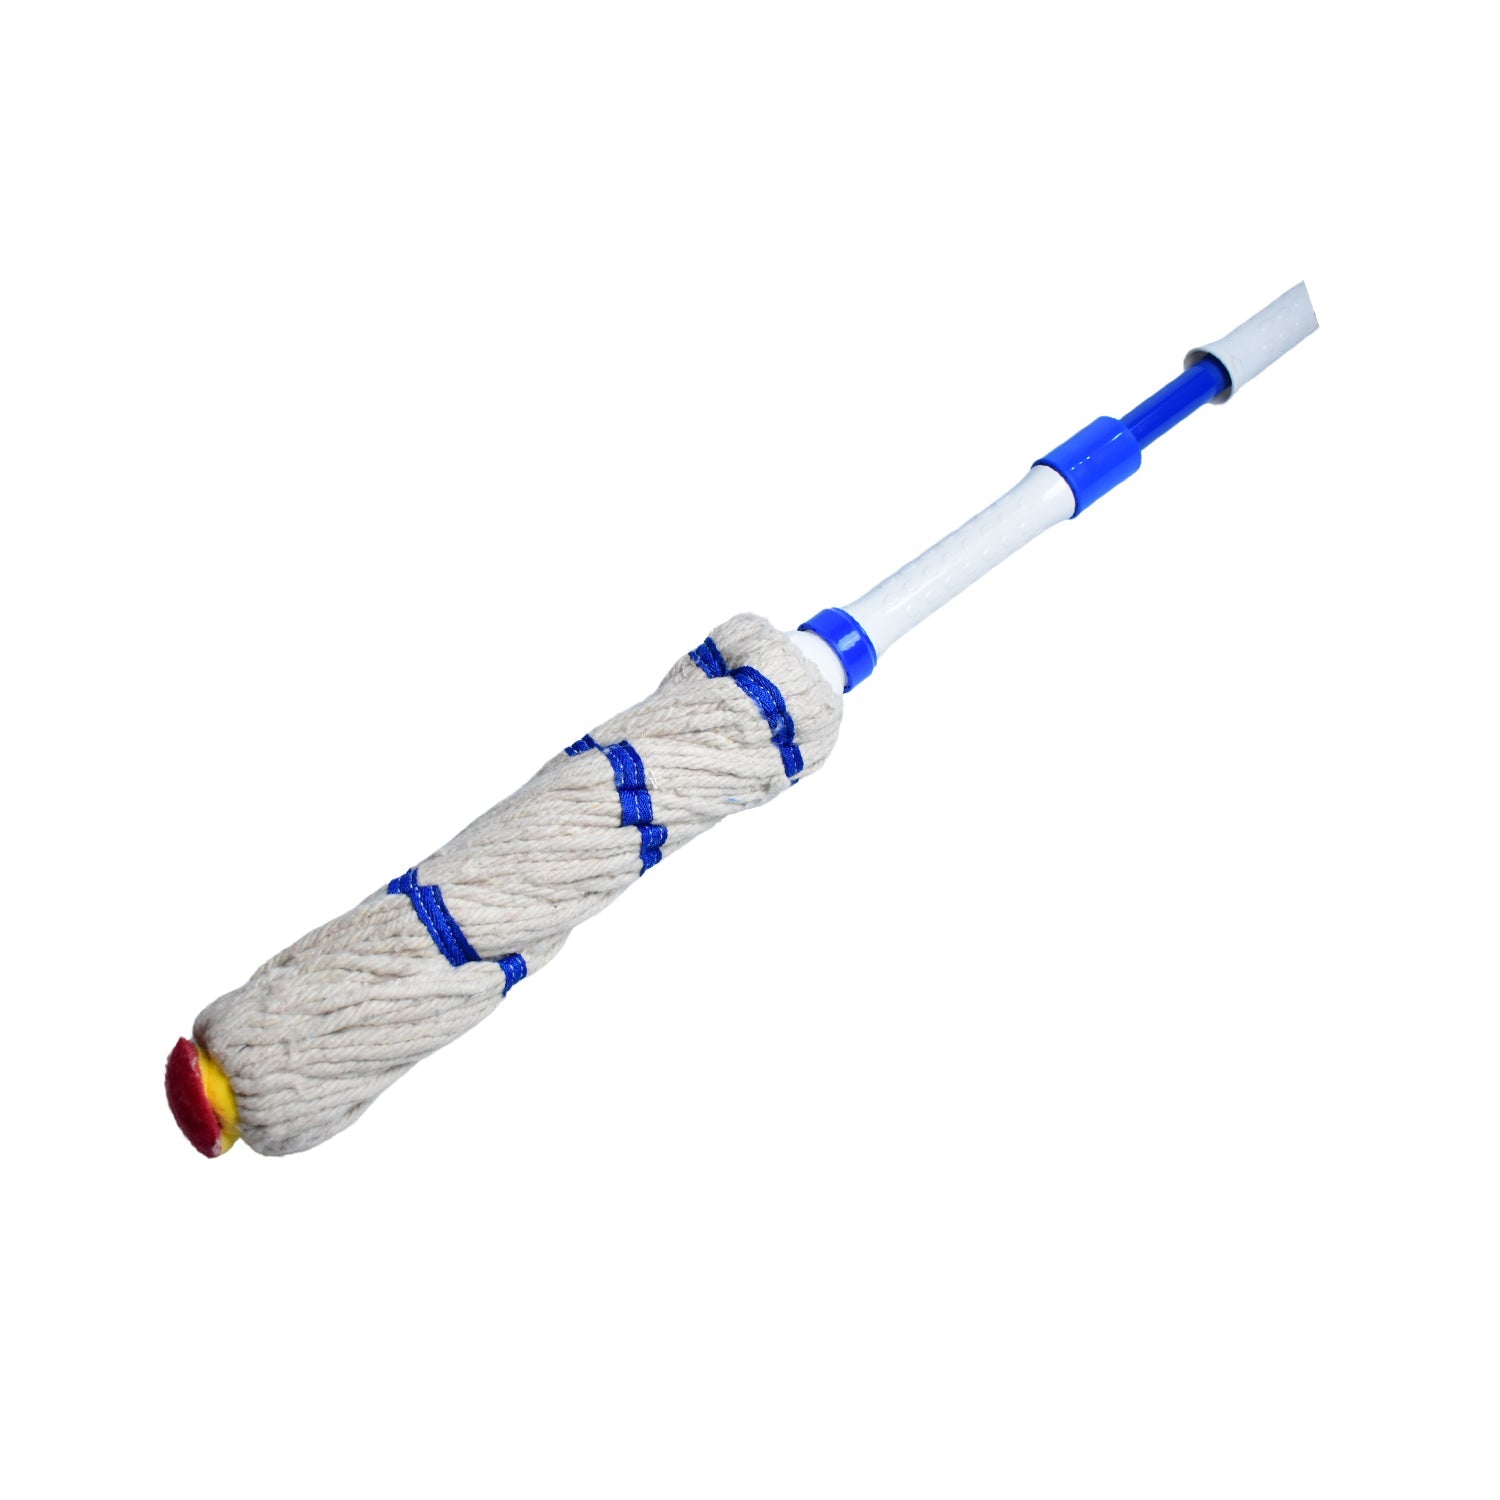 0623 Mop Stick Degree Expandable Stainless Steel Stick Rod Set, Handle, Head, Magic Riffle, Standard Mop, Cotton Twist Mop